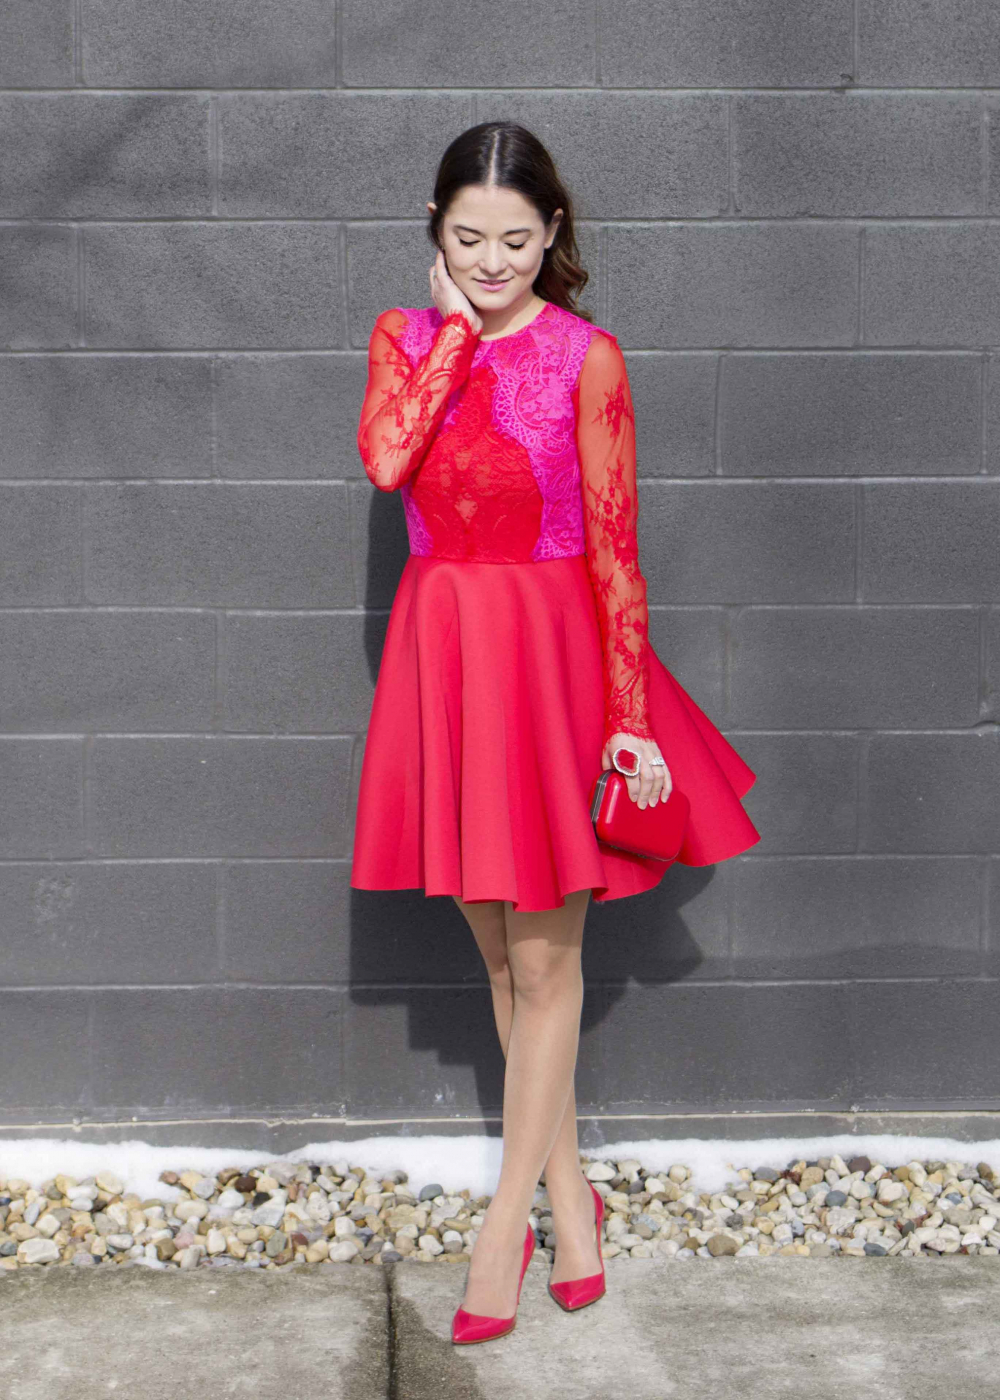 ASOS Red Pink Lace Dress